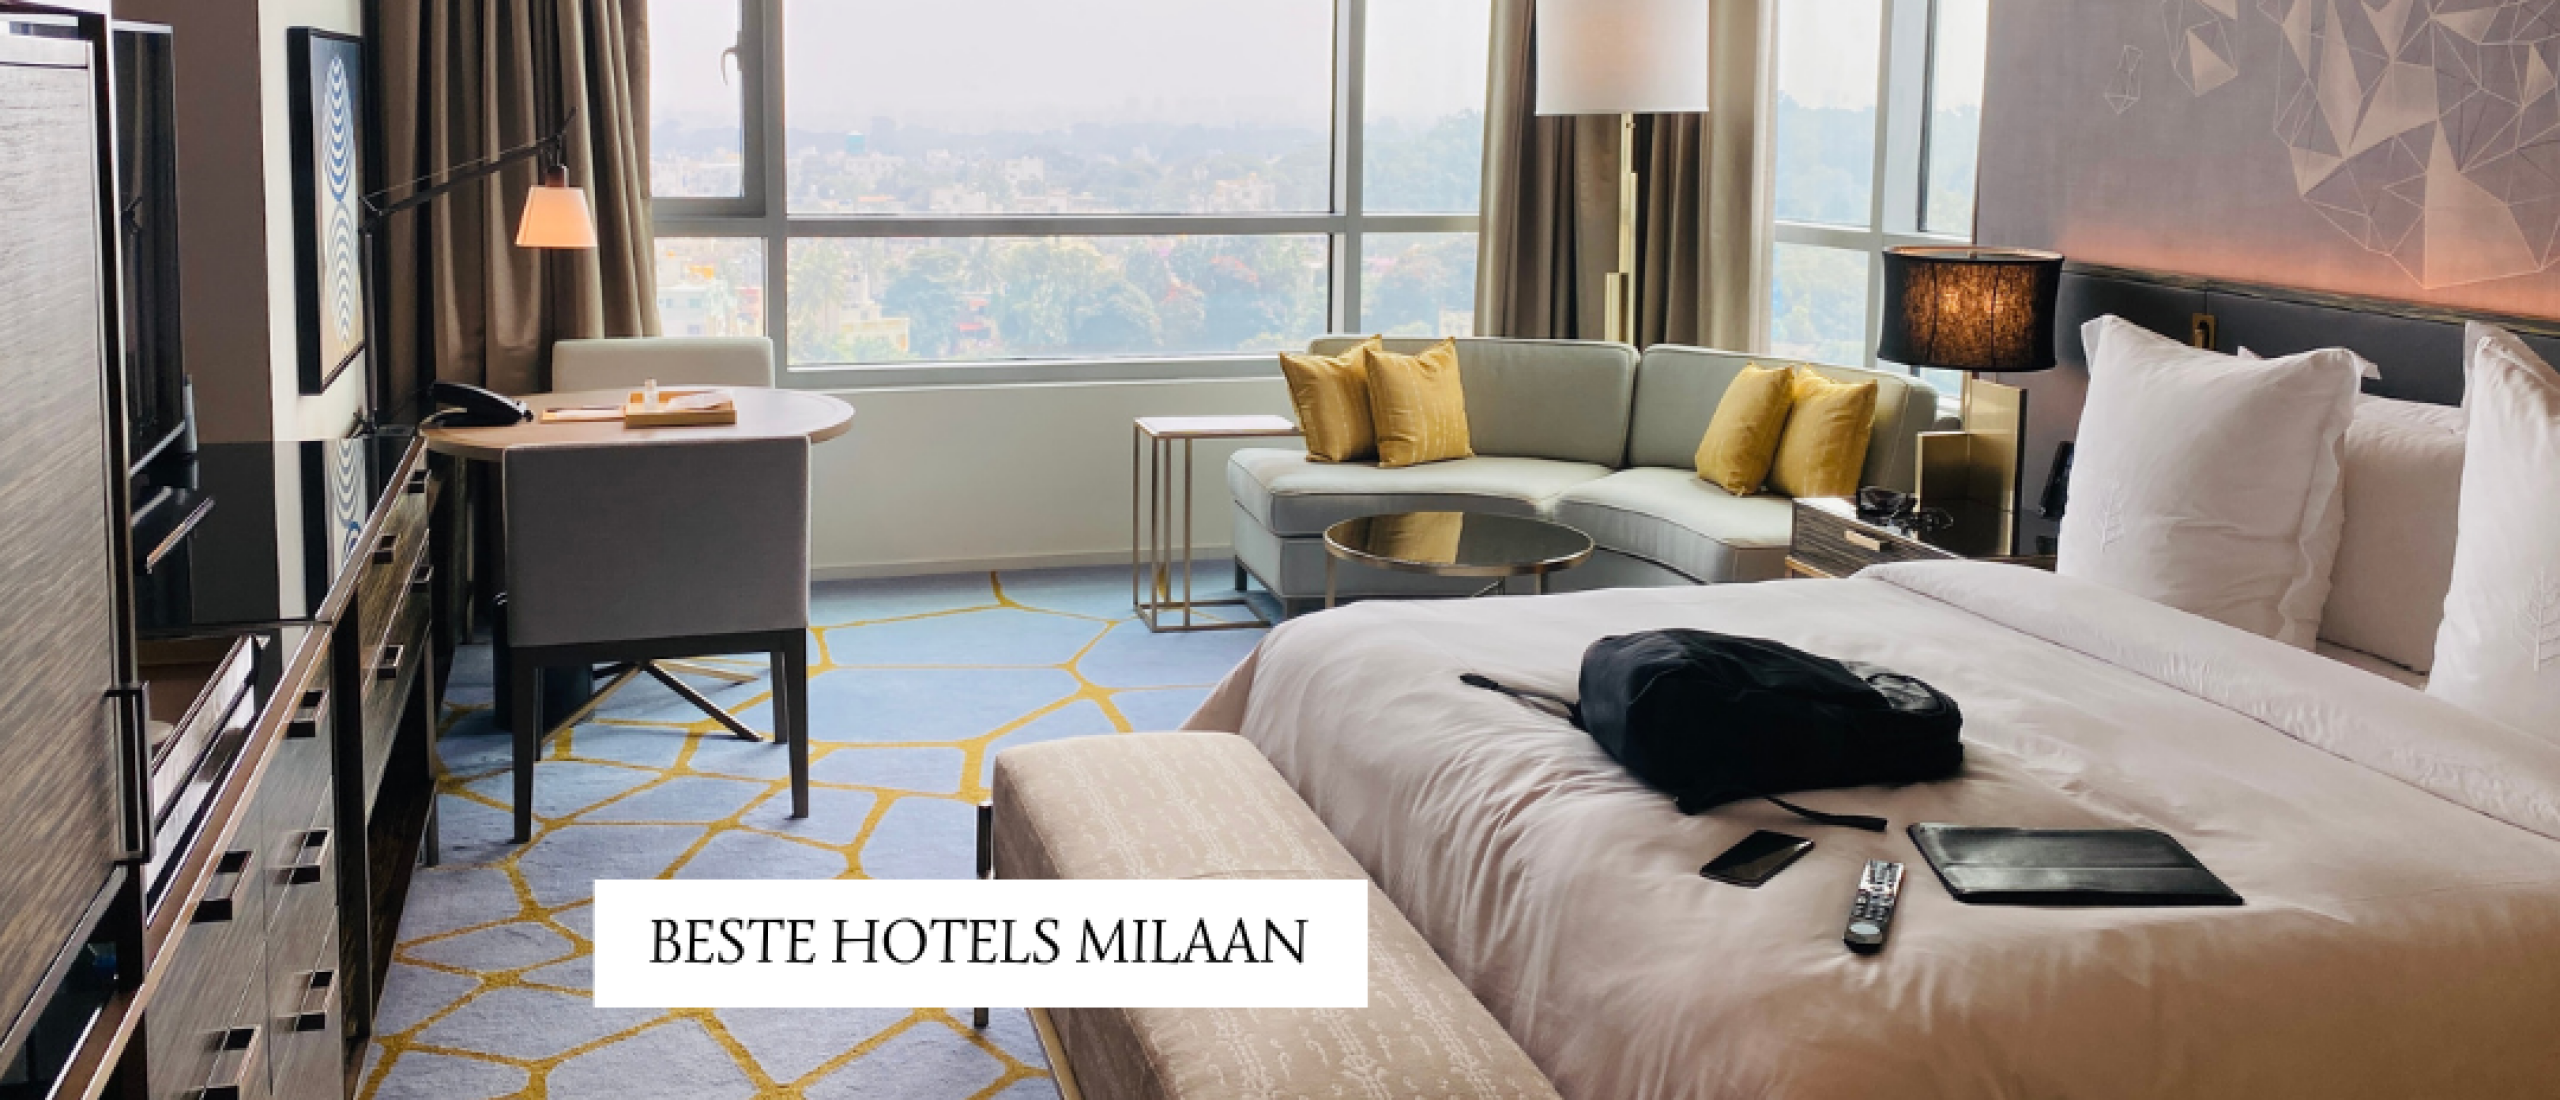 Beste hotel in Milaan inclusief vlucht – ⛪ Top 7 leukste hotels Milaan